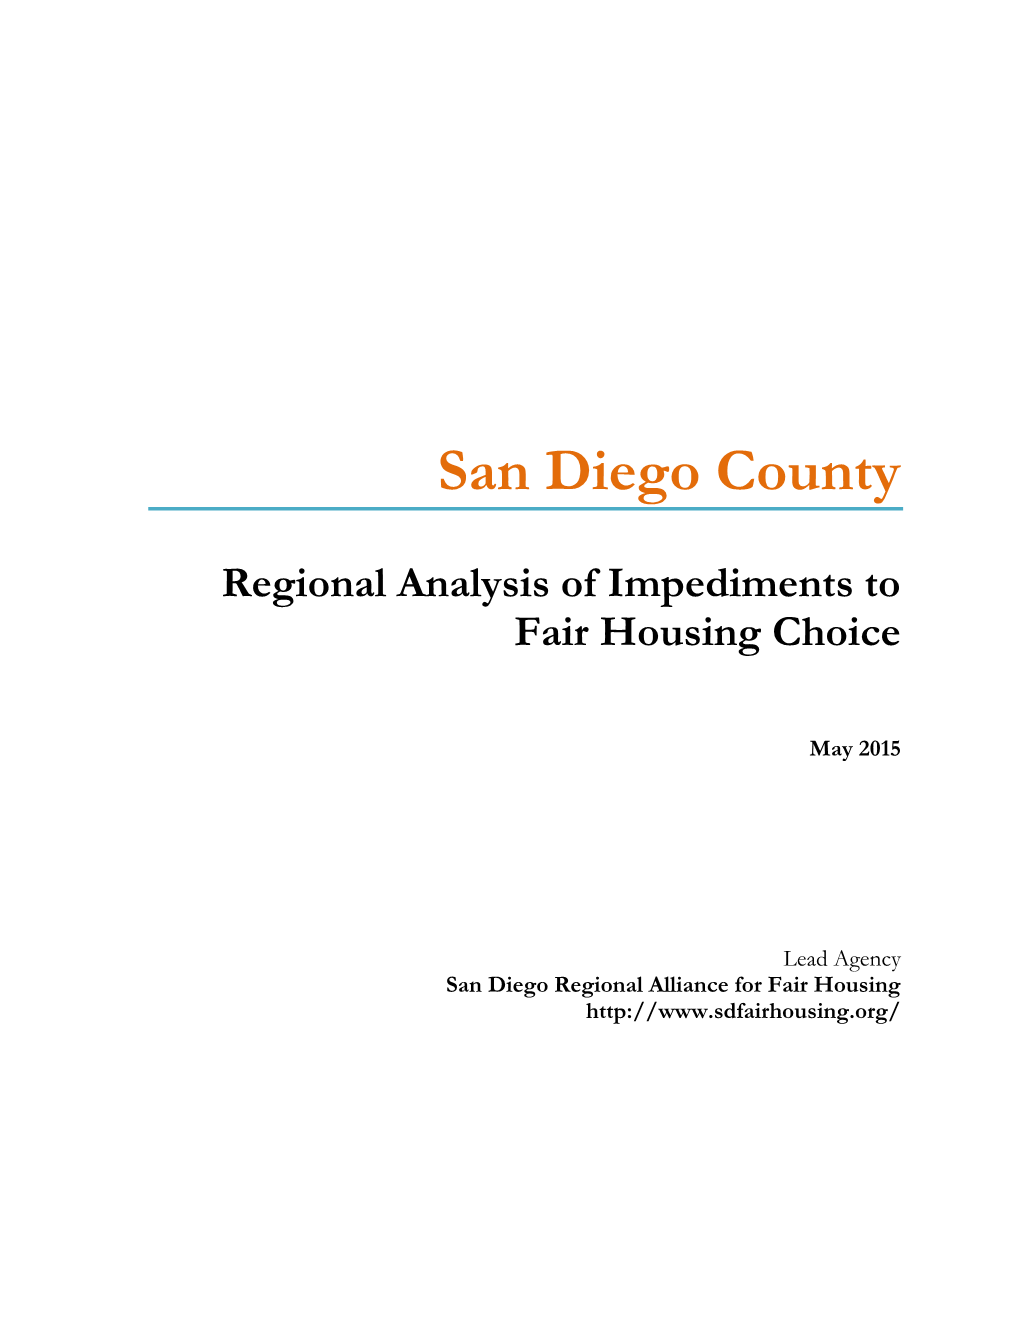 San Diego County Analysis of Impediments to Fair Housing Choice